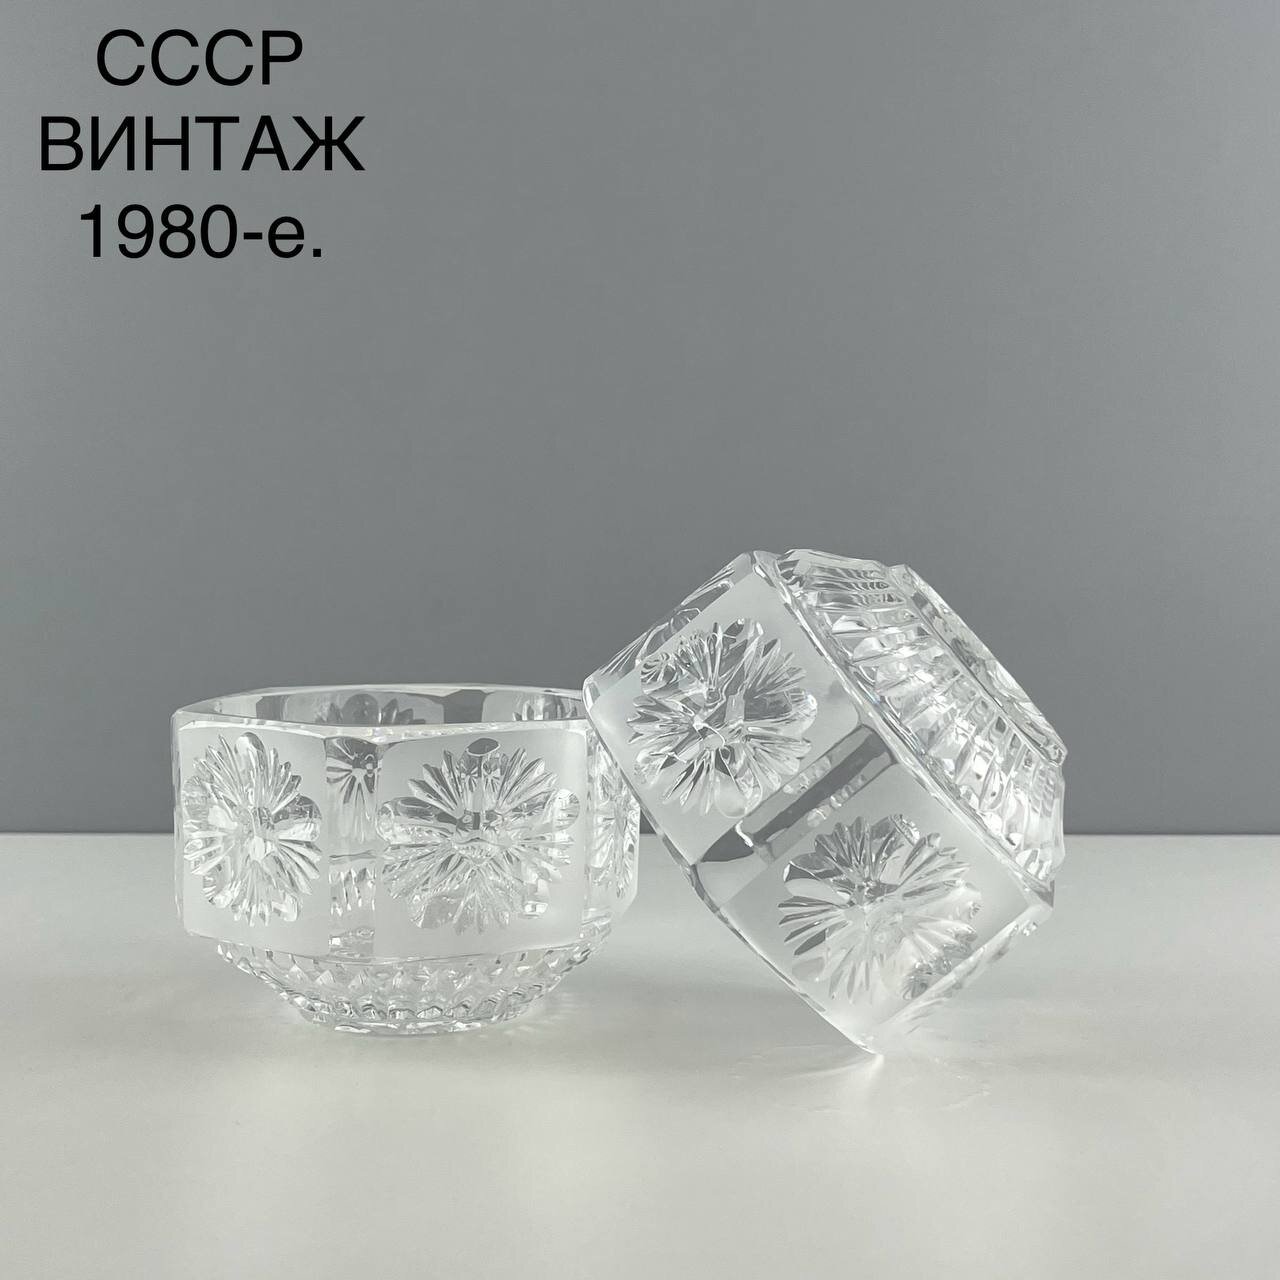 Винтажная пара конфетниц "Цветочная". Хрусталь. СССР, 1970-е.